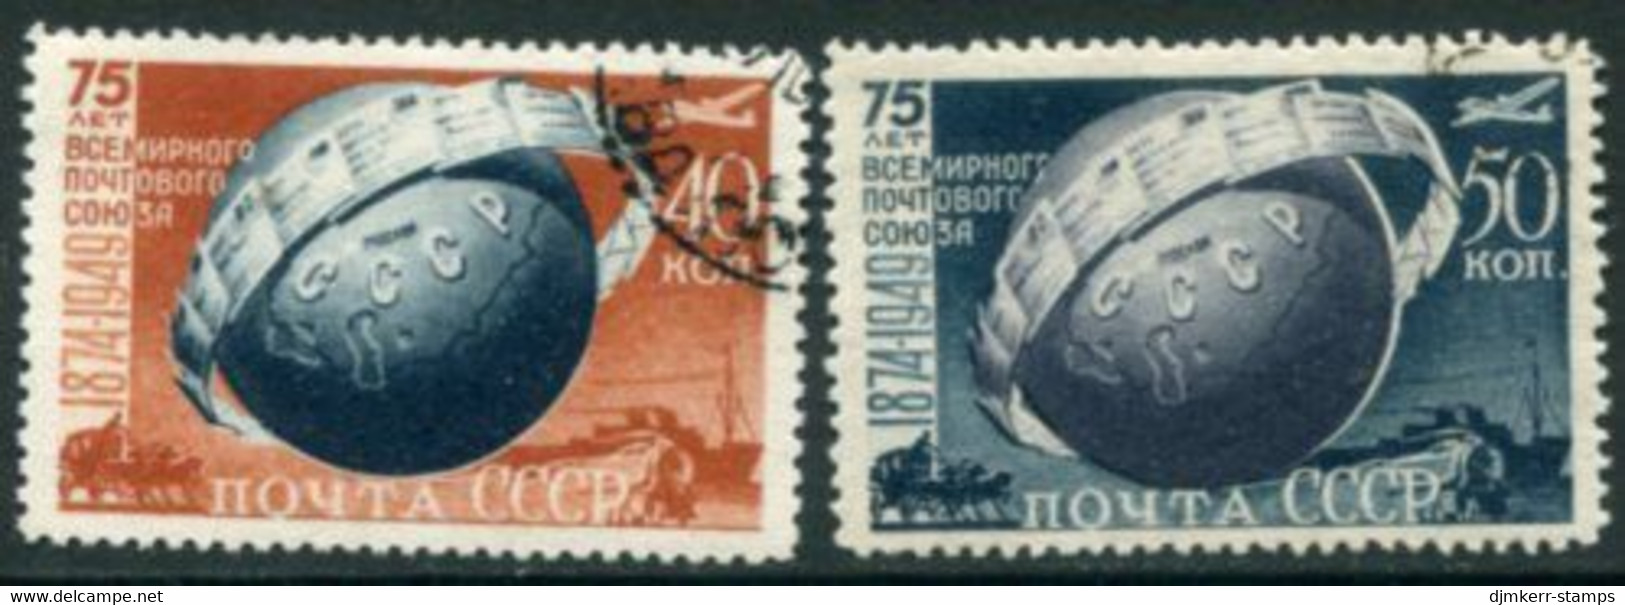 SOVIET UNION 1949 UPU Anniversary Used.  Michel 1383-84A - Gebraucht